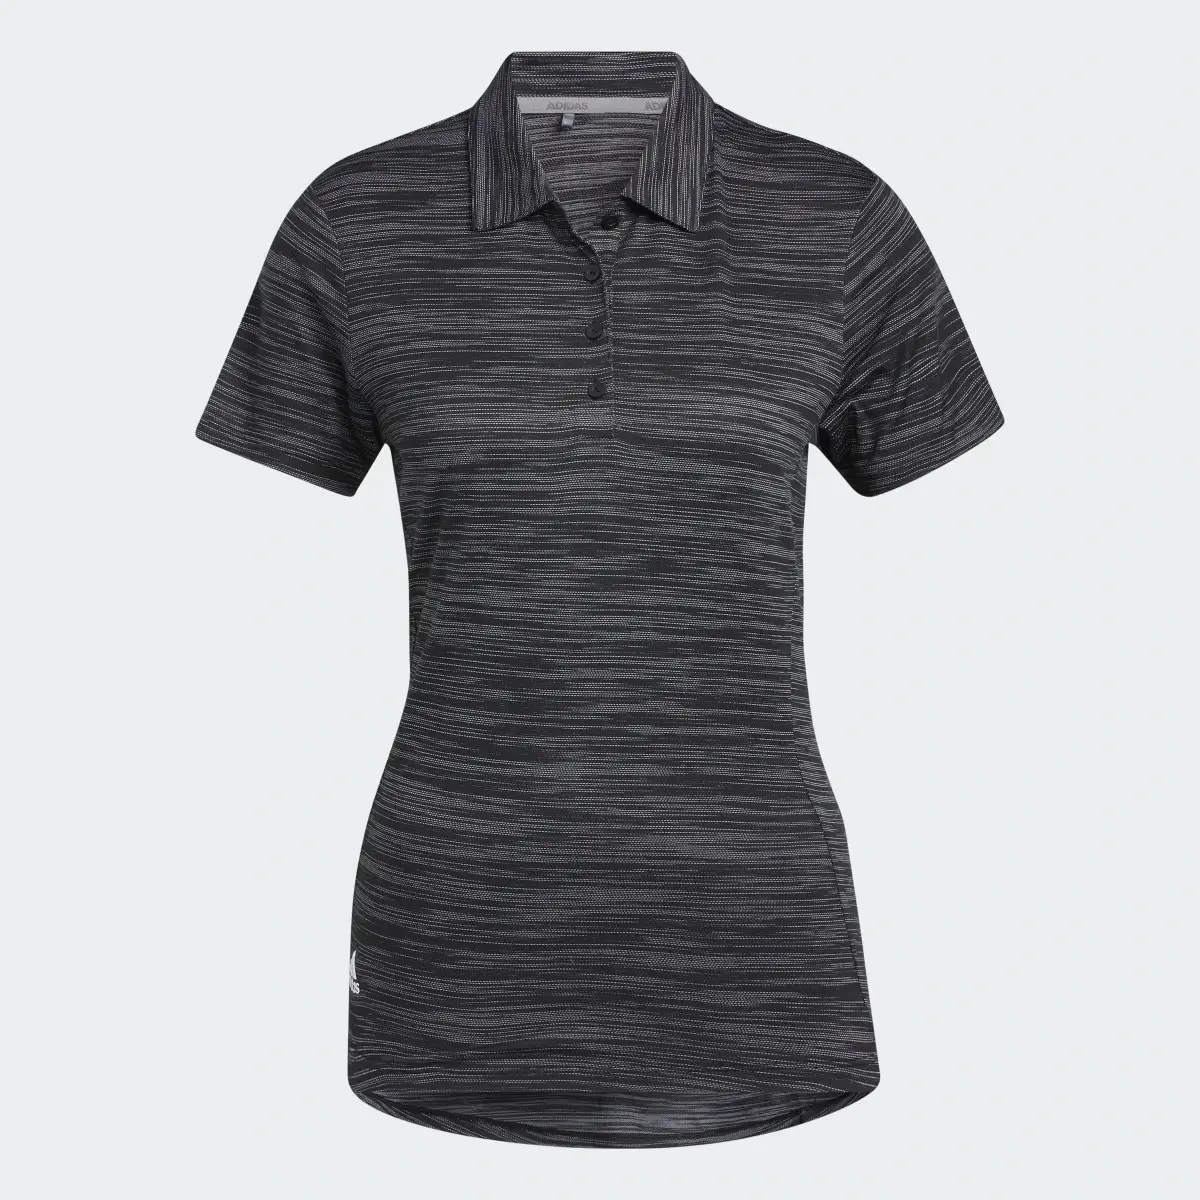 Adidas Space-Dyed Short-Sleeve Poloshirt. 1